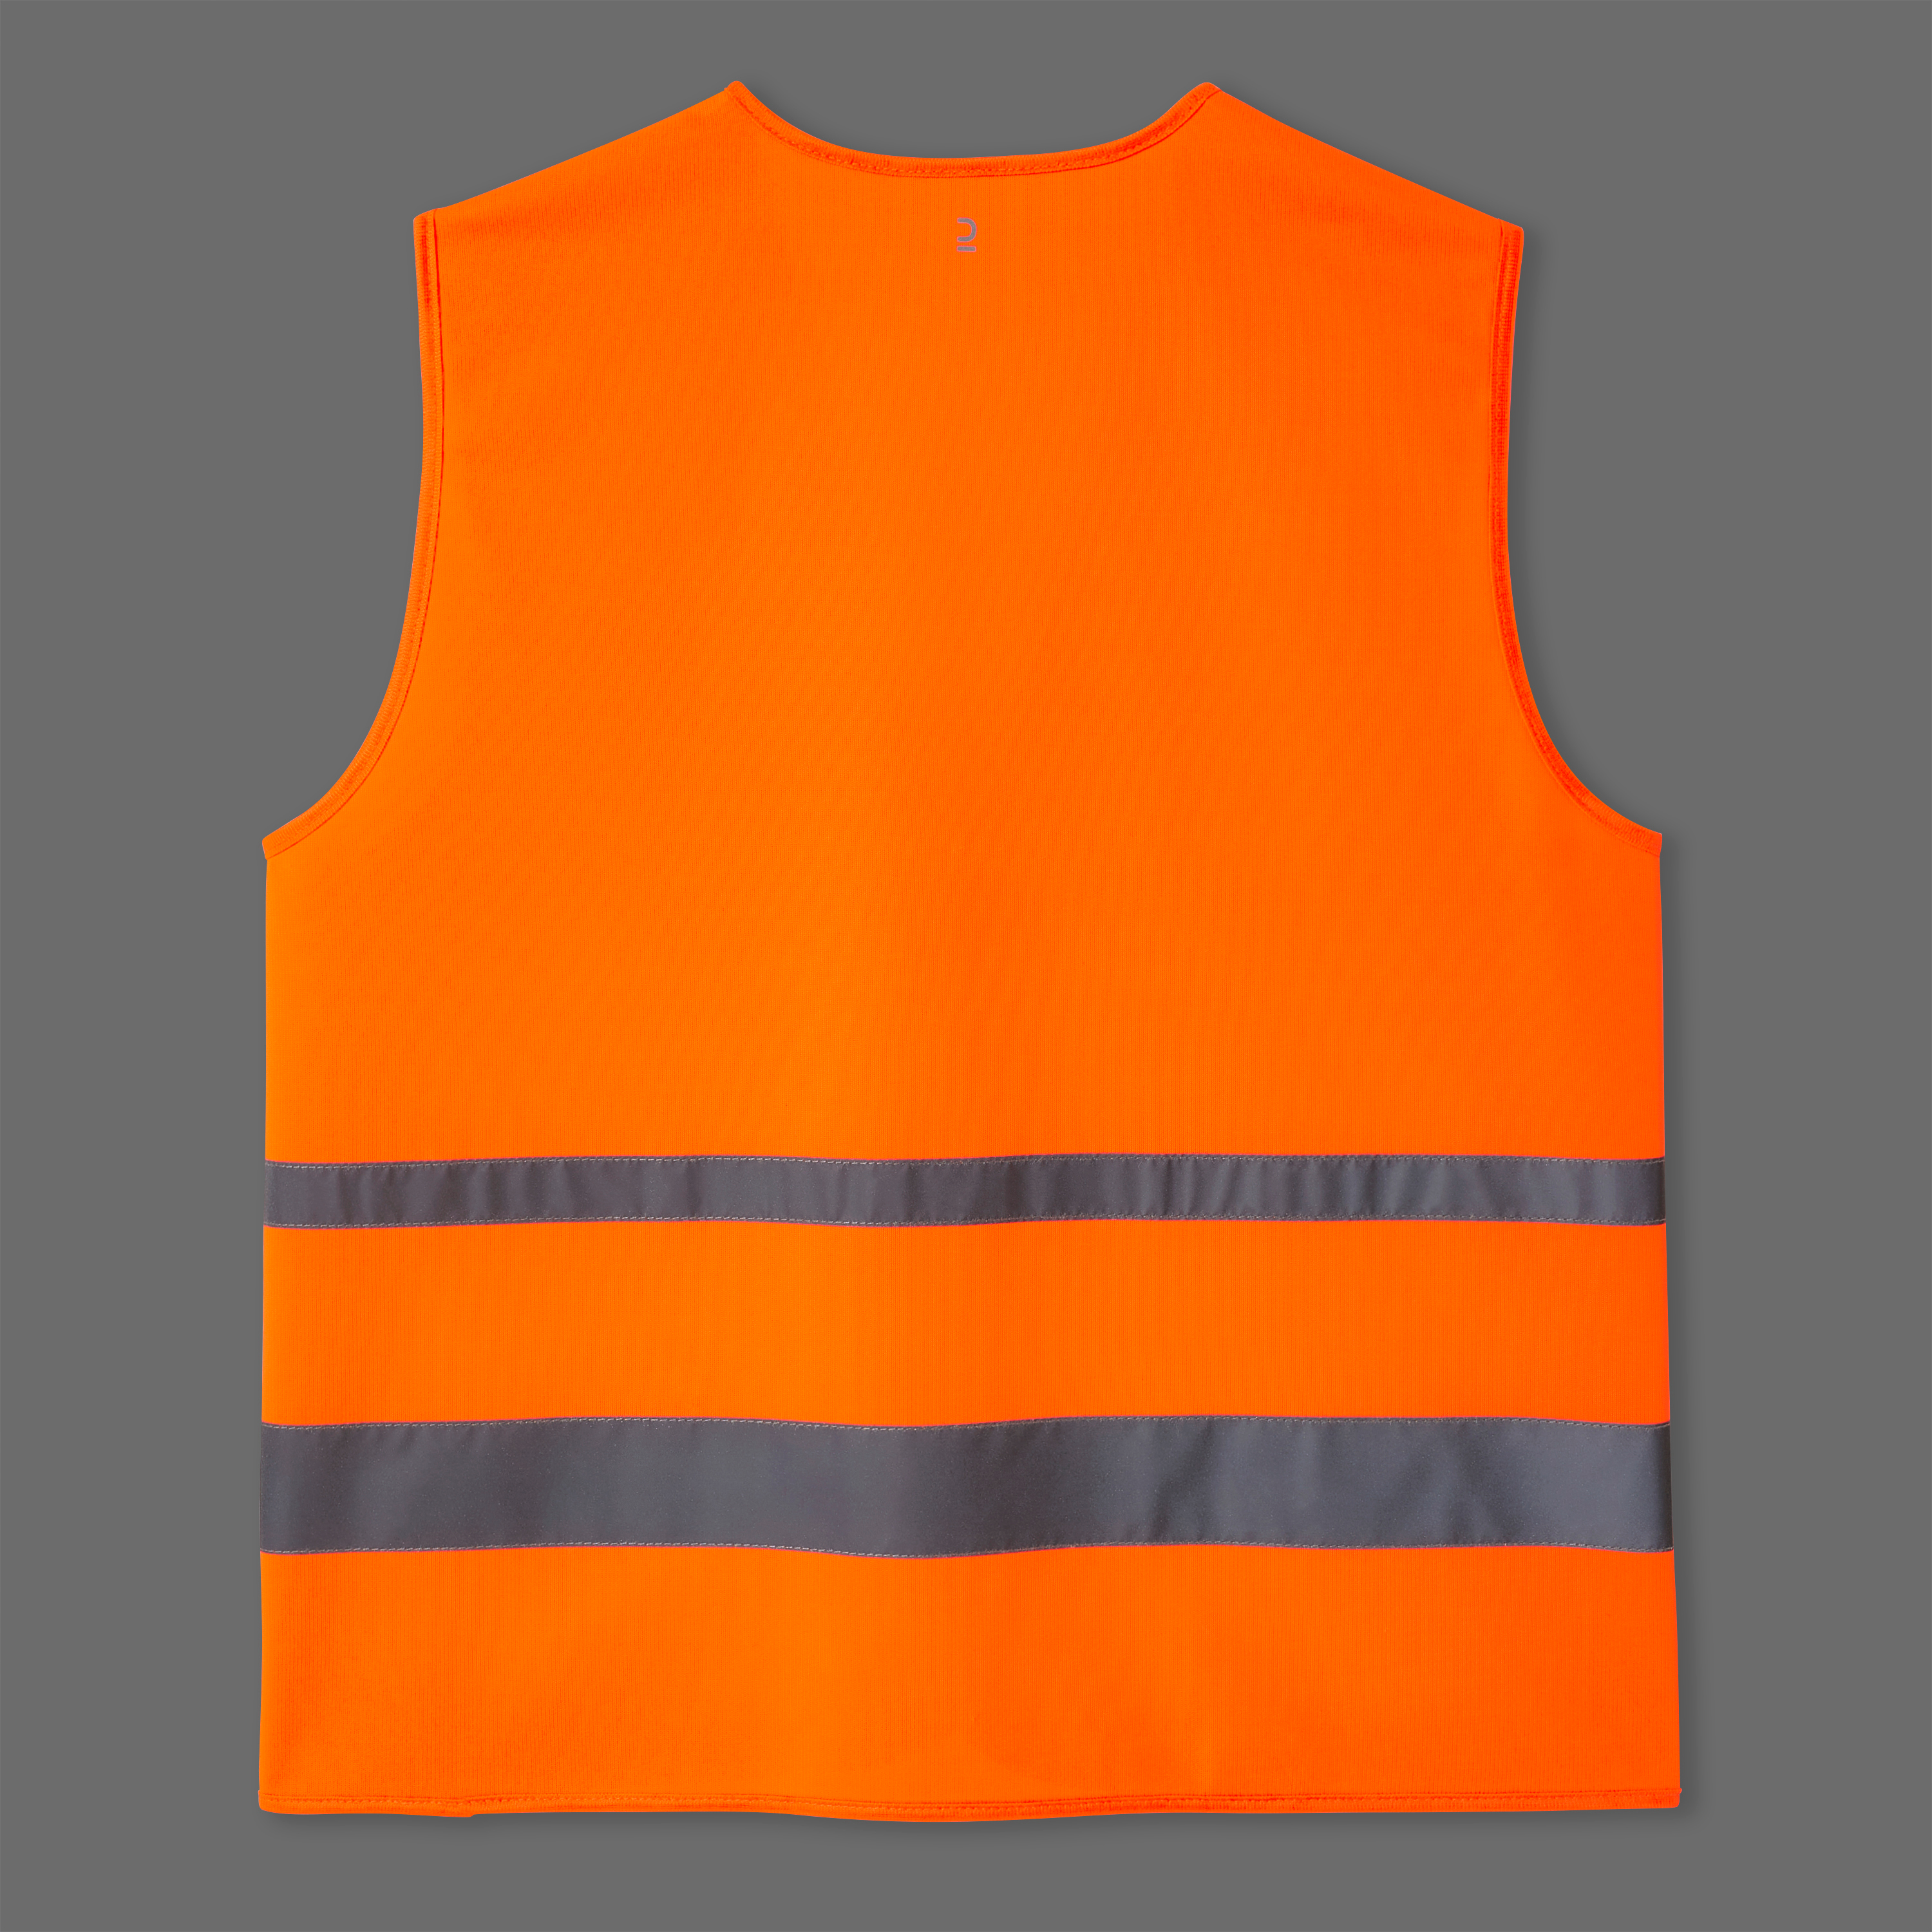 Gilet de sécurité orange fluo